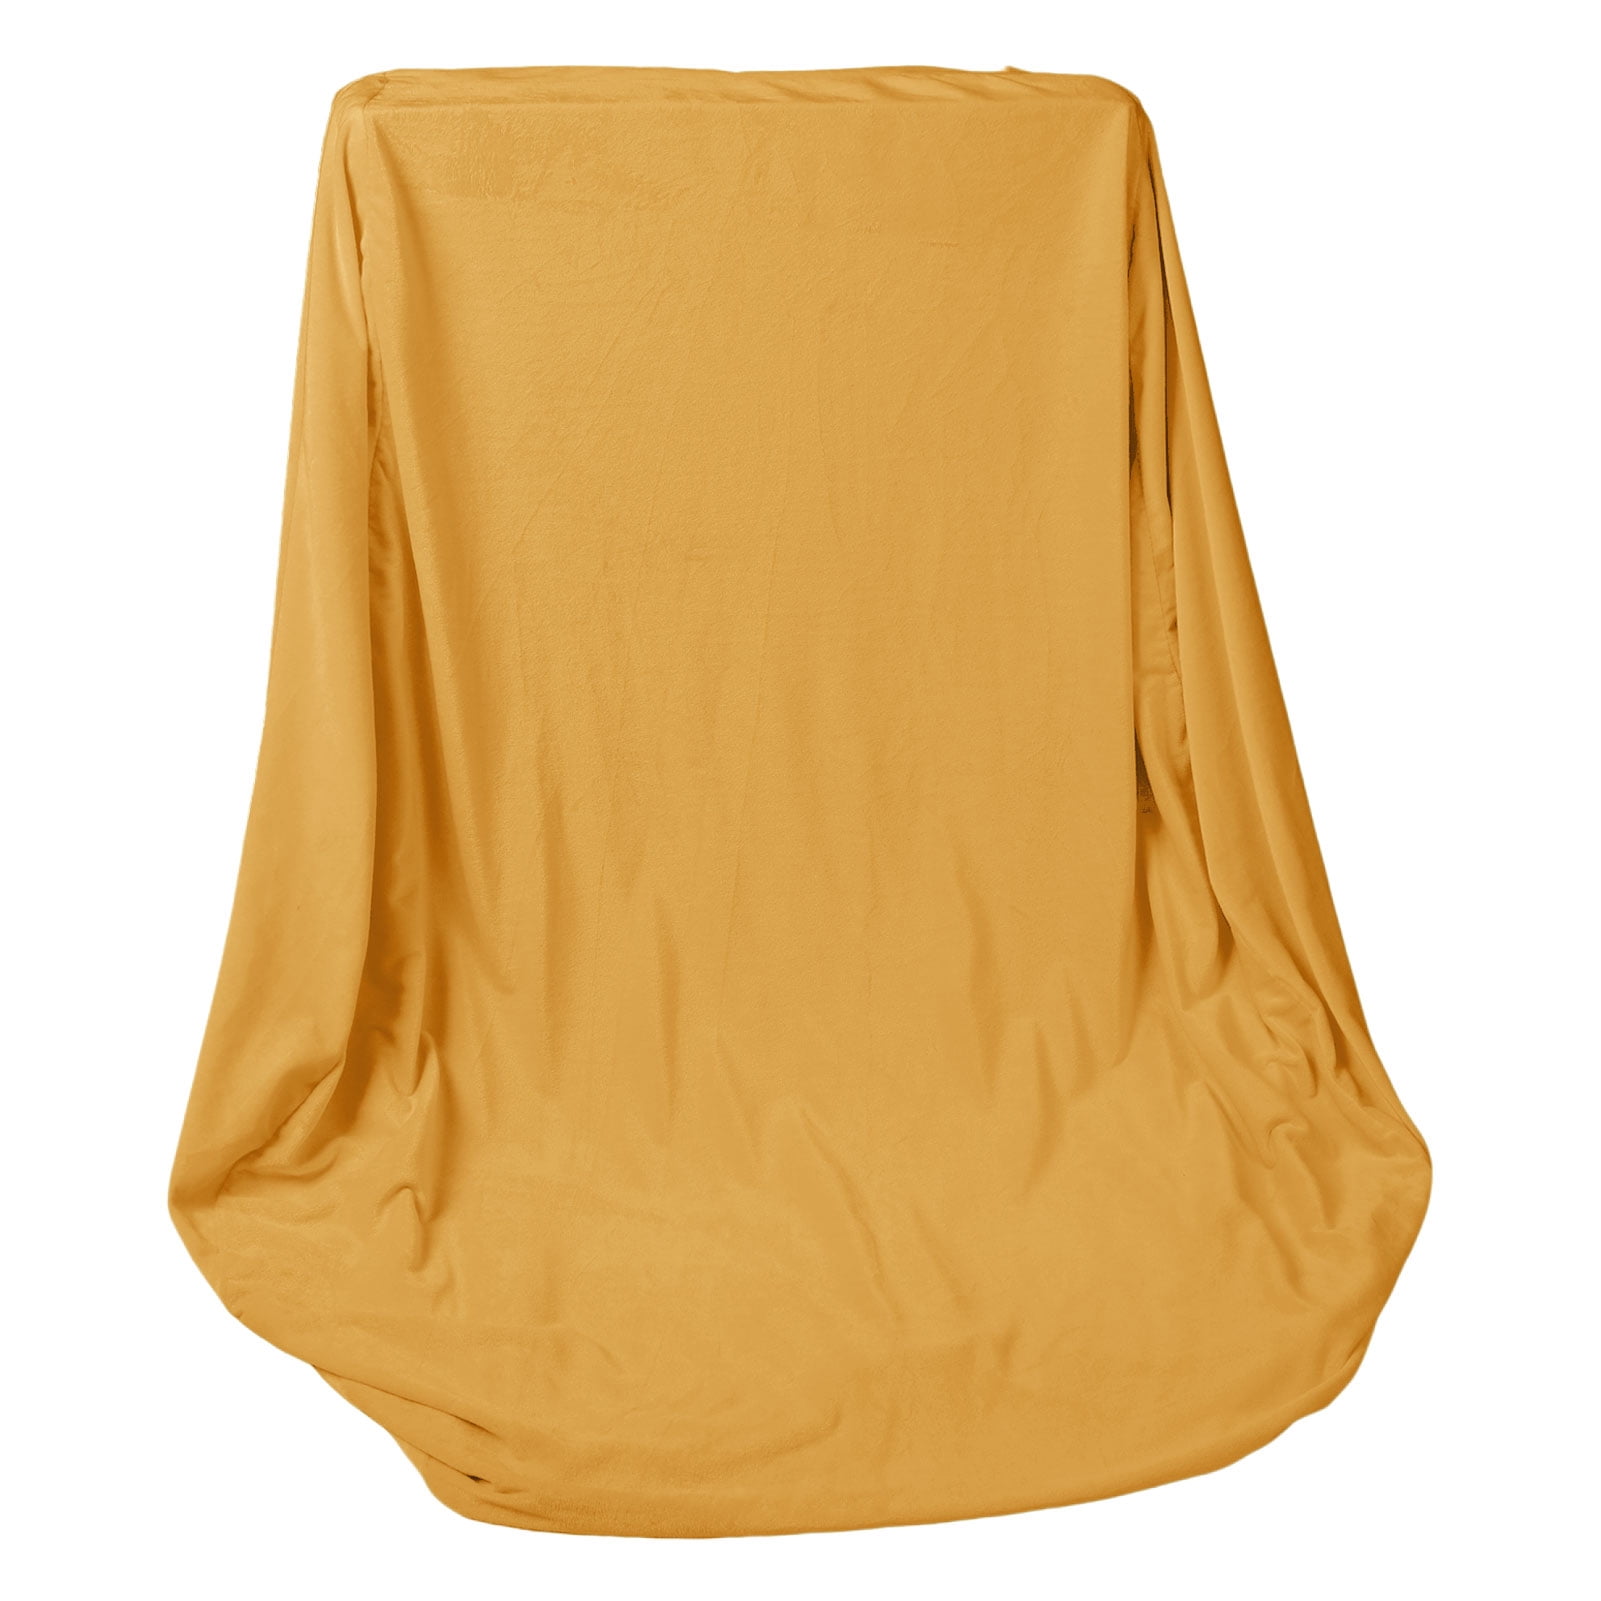 meijuhuga Sofa Bean Bag No Filler Soft Washable Comfortable Anti-fading  Wear Resistant High Elastic Extra Large Bean Bag Chair Cover Home Decor